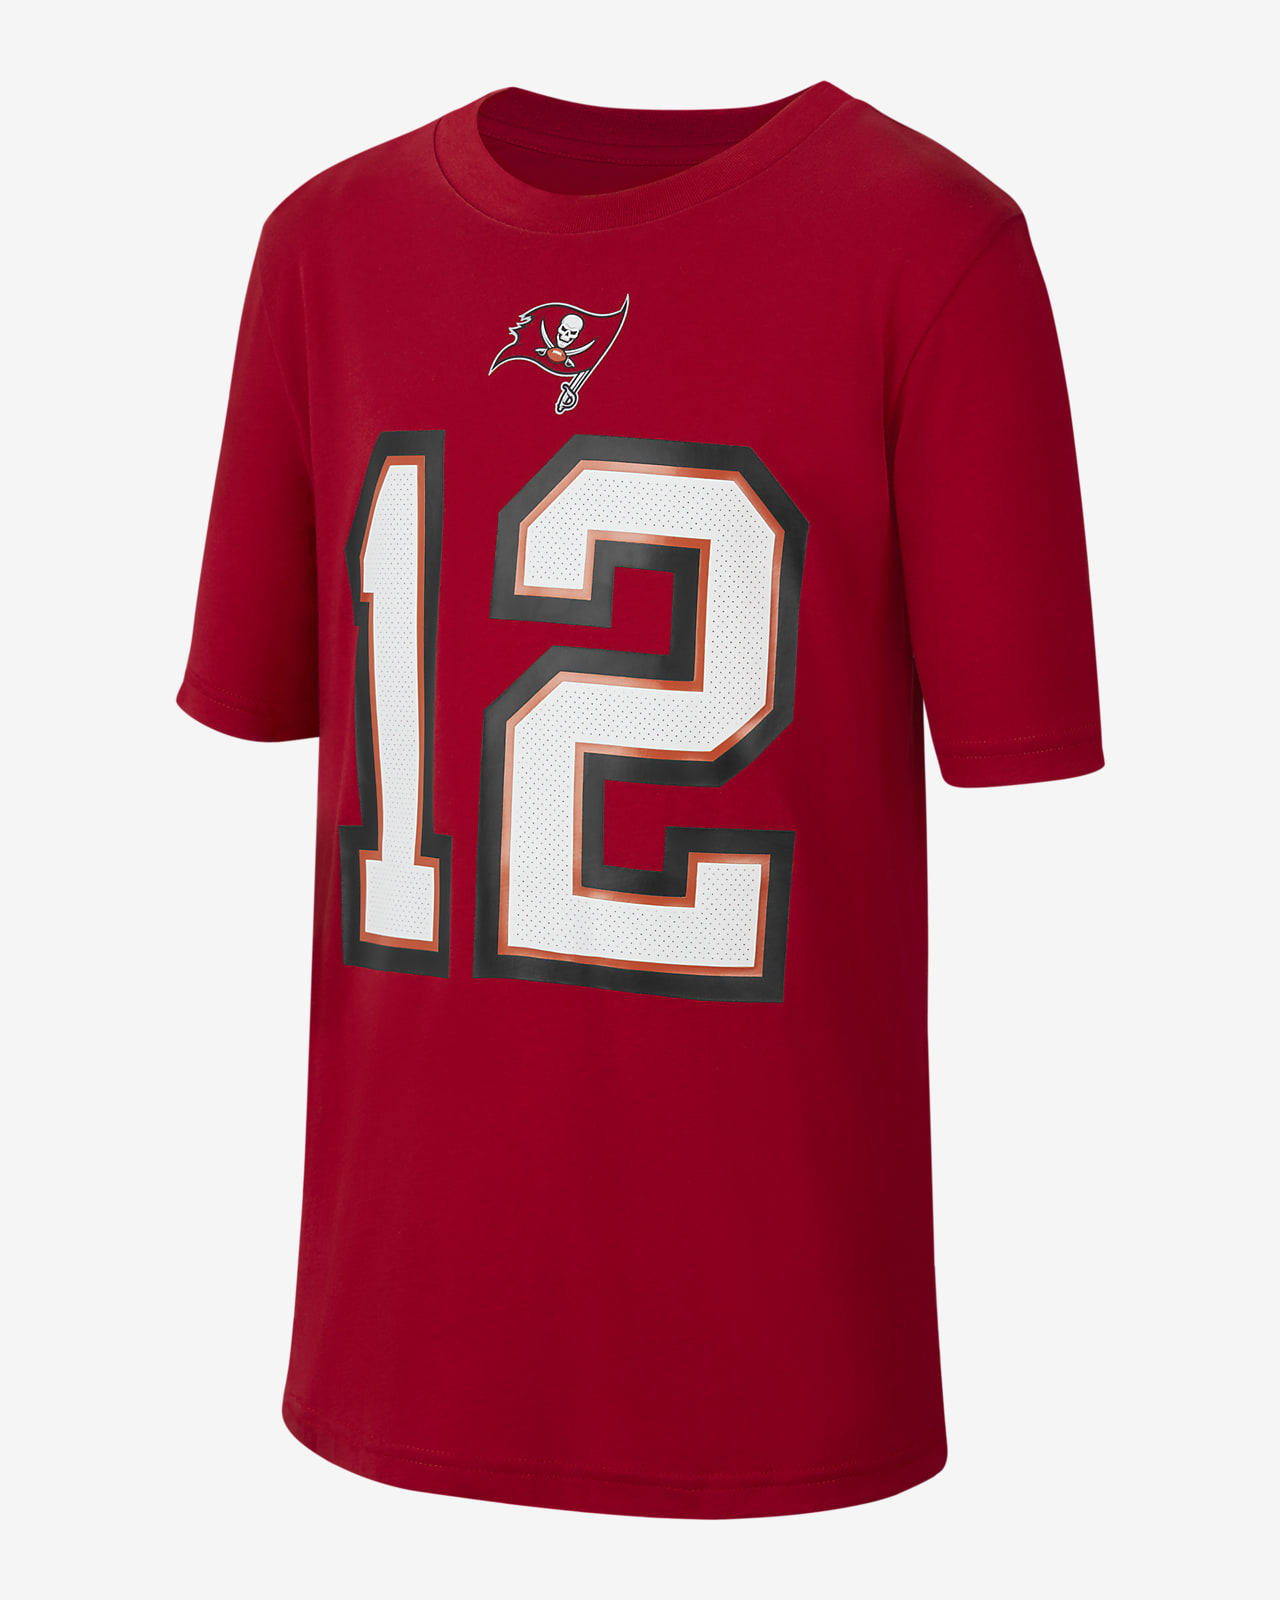 T-shirt Nike (NFL Tampa Bay Buccaneers) pour ado